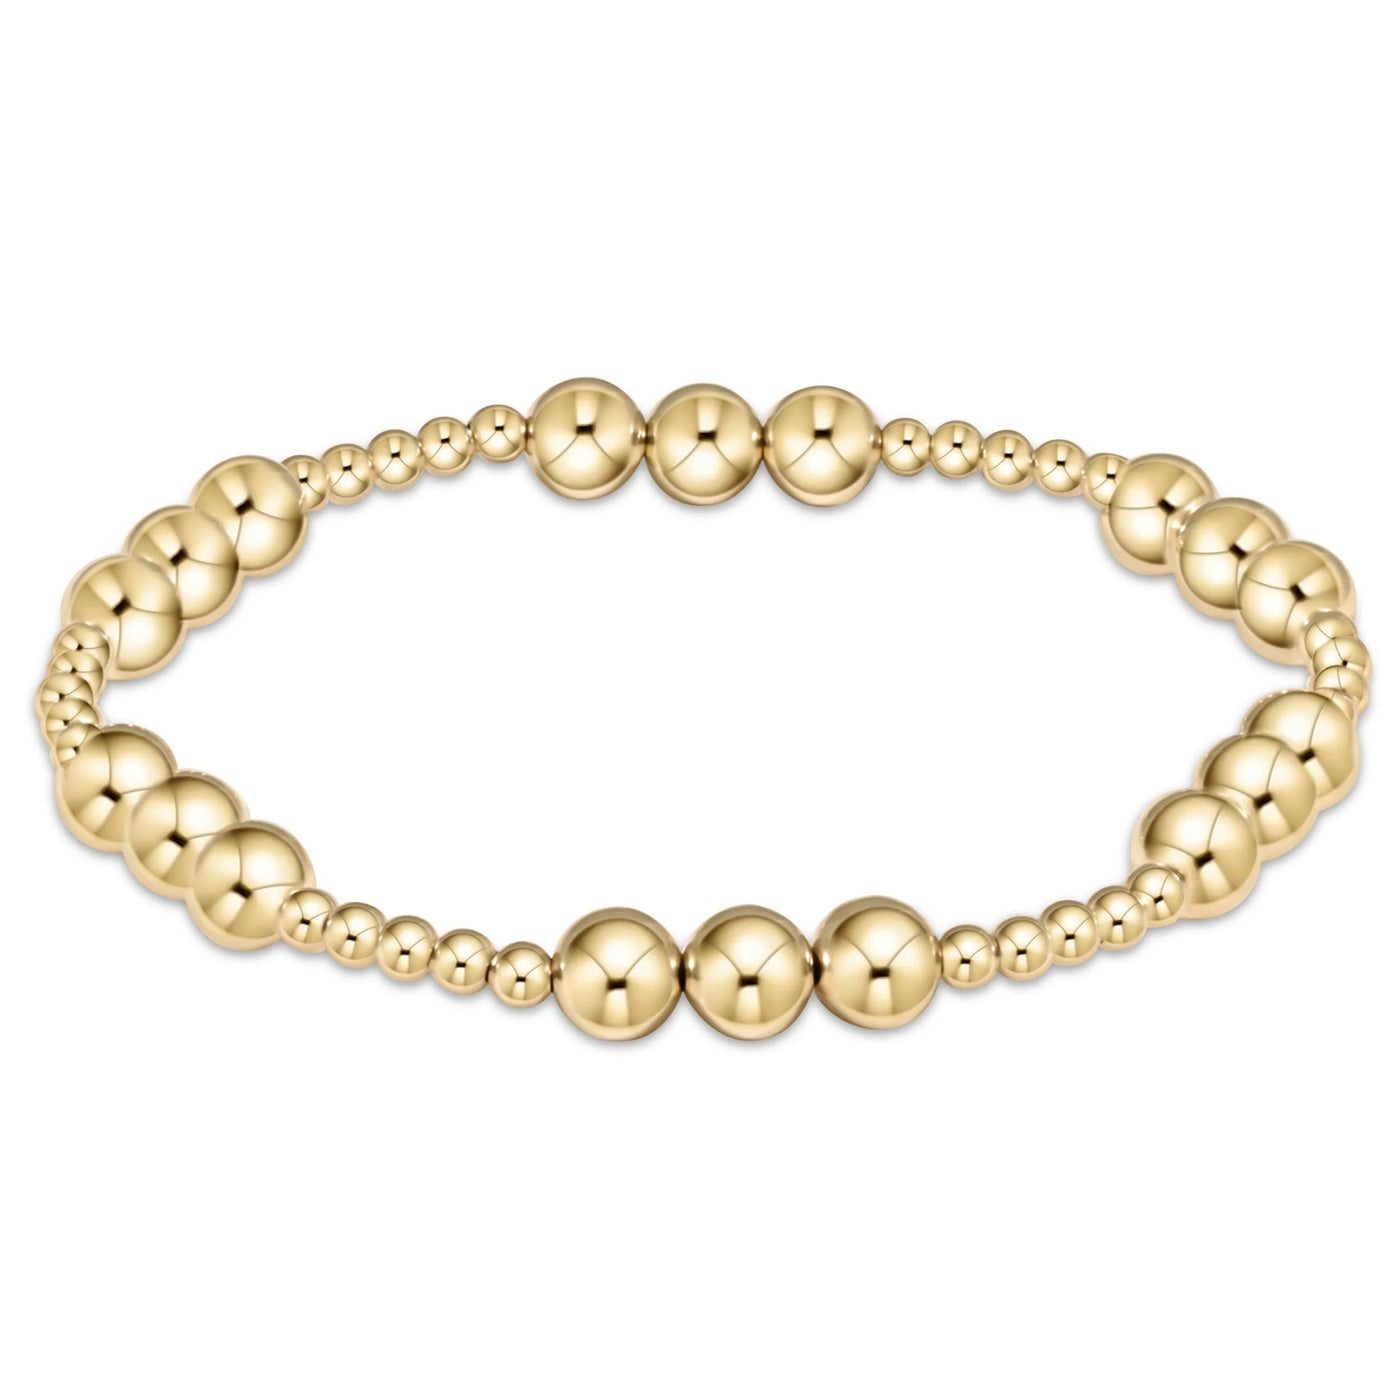 Enewton classic joy pattern 6mm bead bracelet - gold